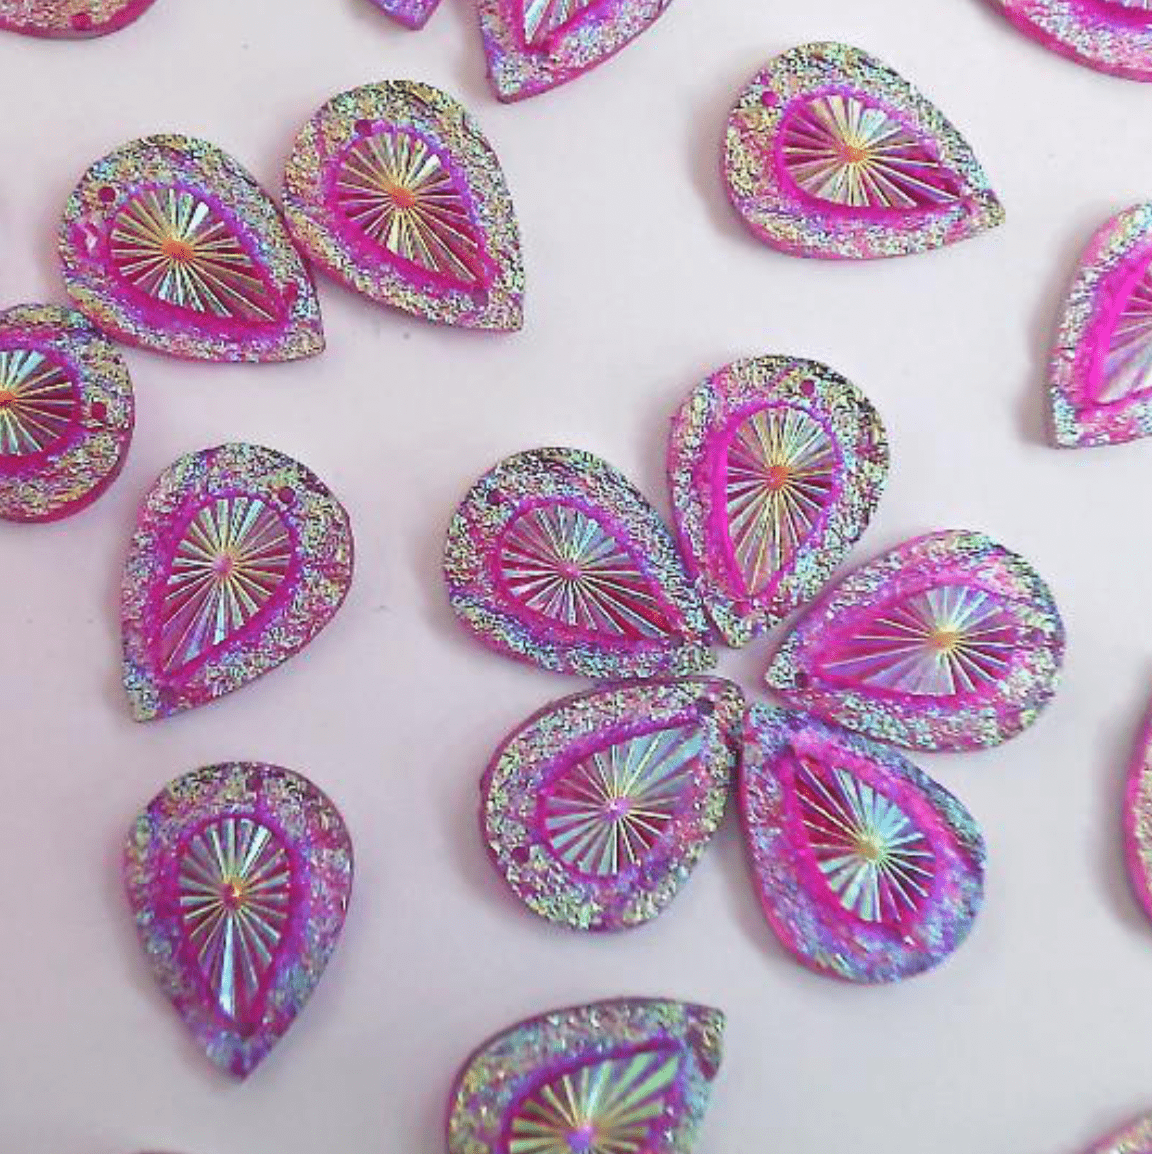 Sundaylace Creations & Bling Resin Gems 13*18mm Pink Burst AB Framed Teardrop, Sew on, Resin Gems (Sold in Pair)